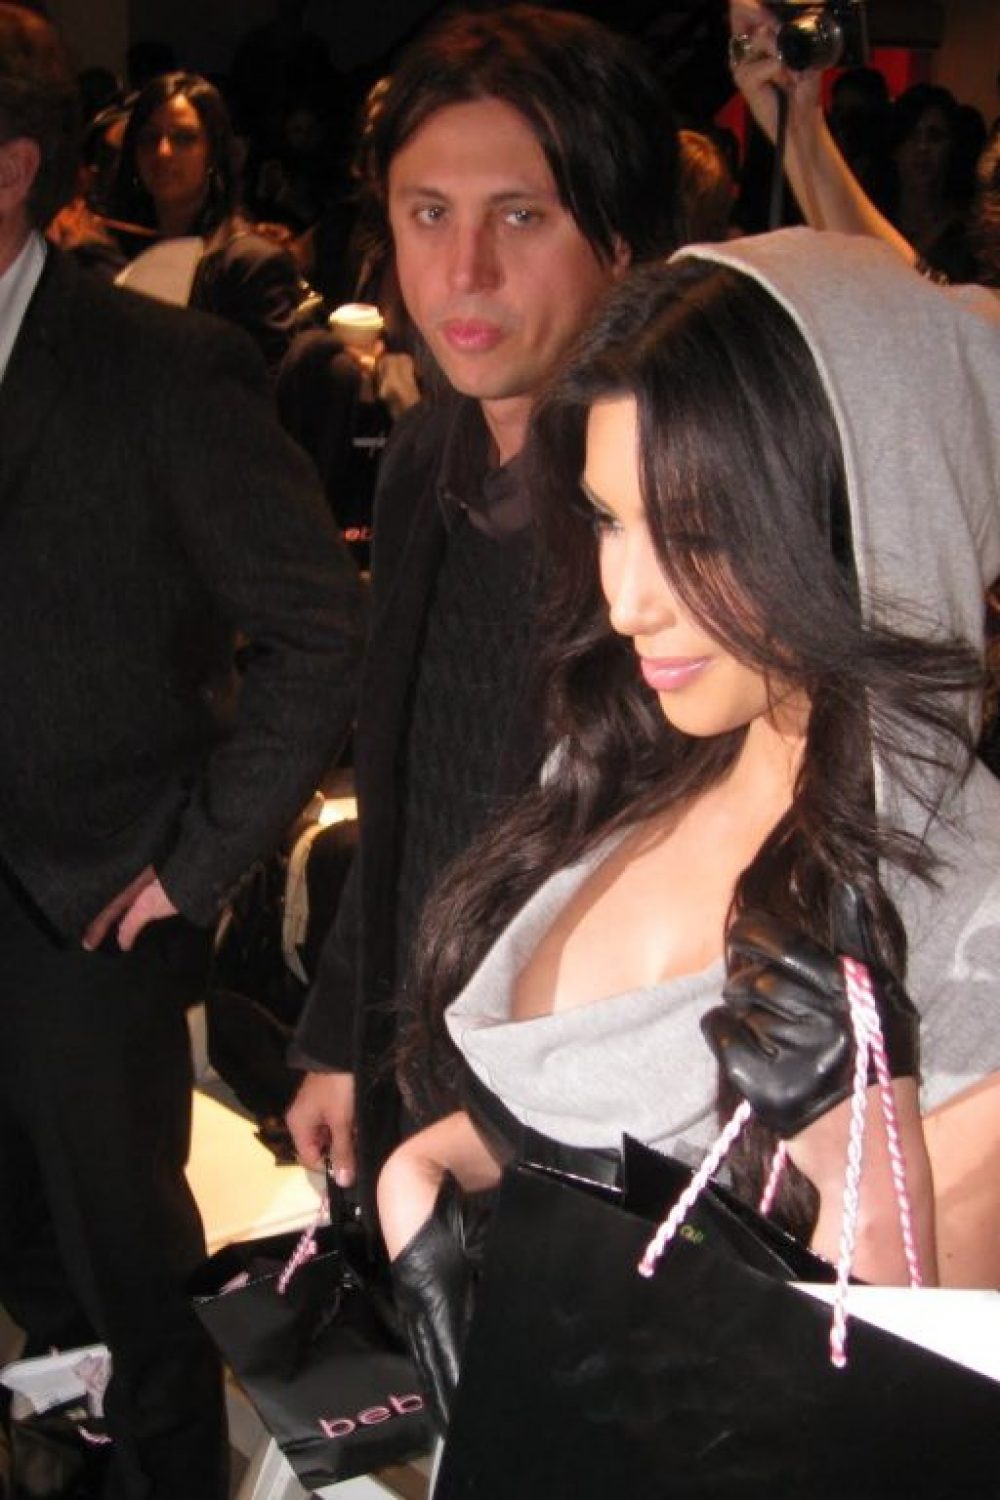 NY Fashion Week F/W 2010: Kardashians for Bebe